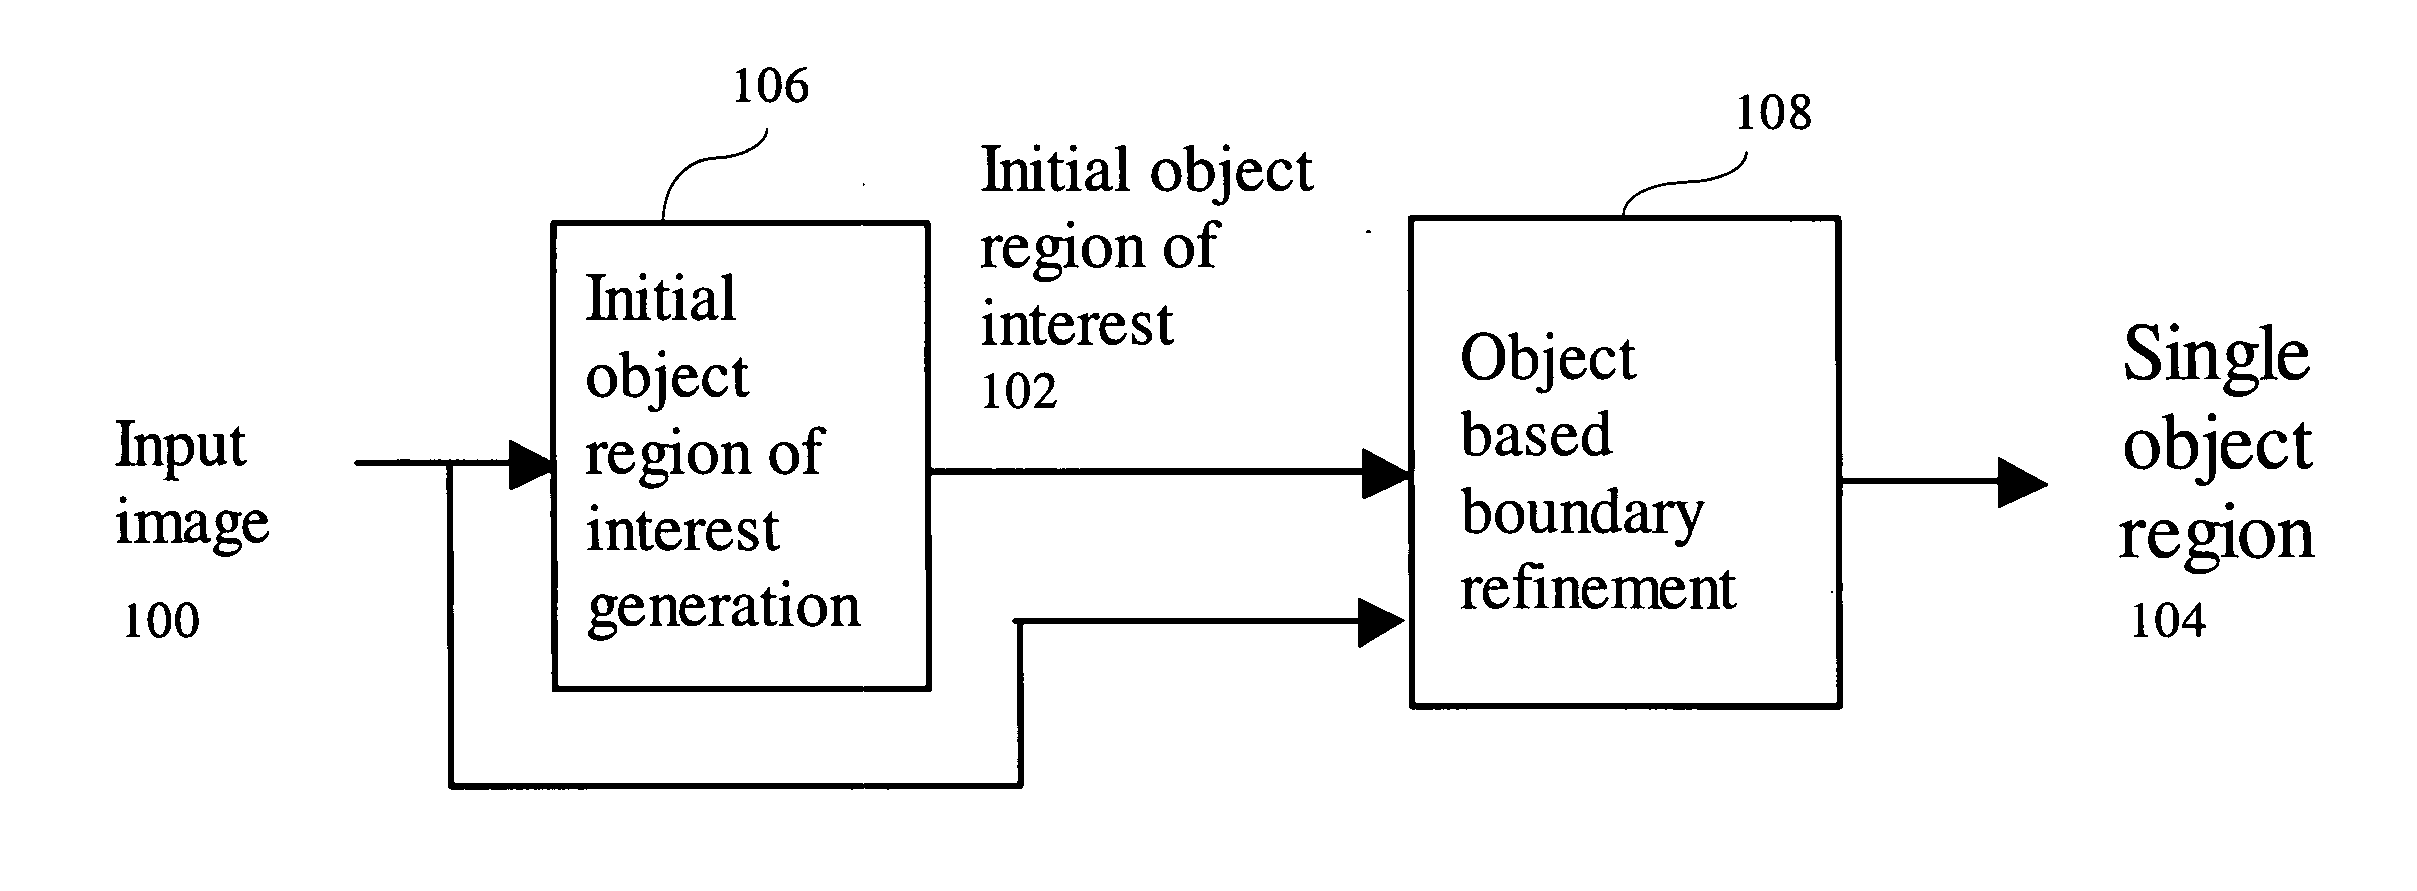 Object based boundary refinement method